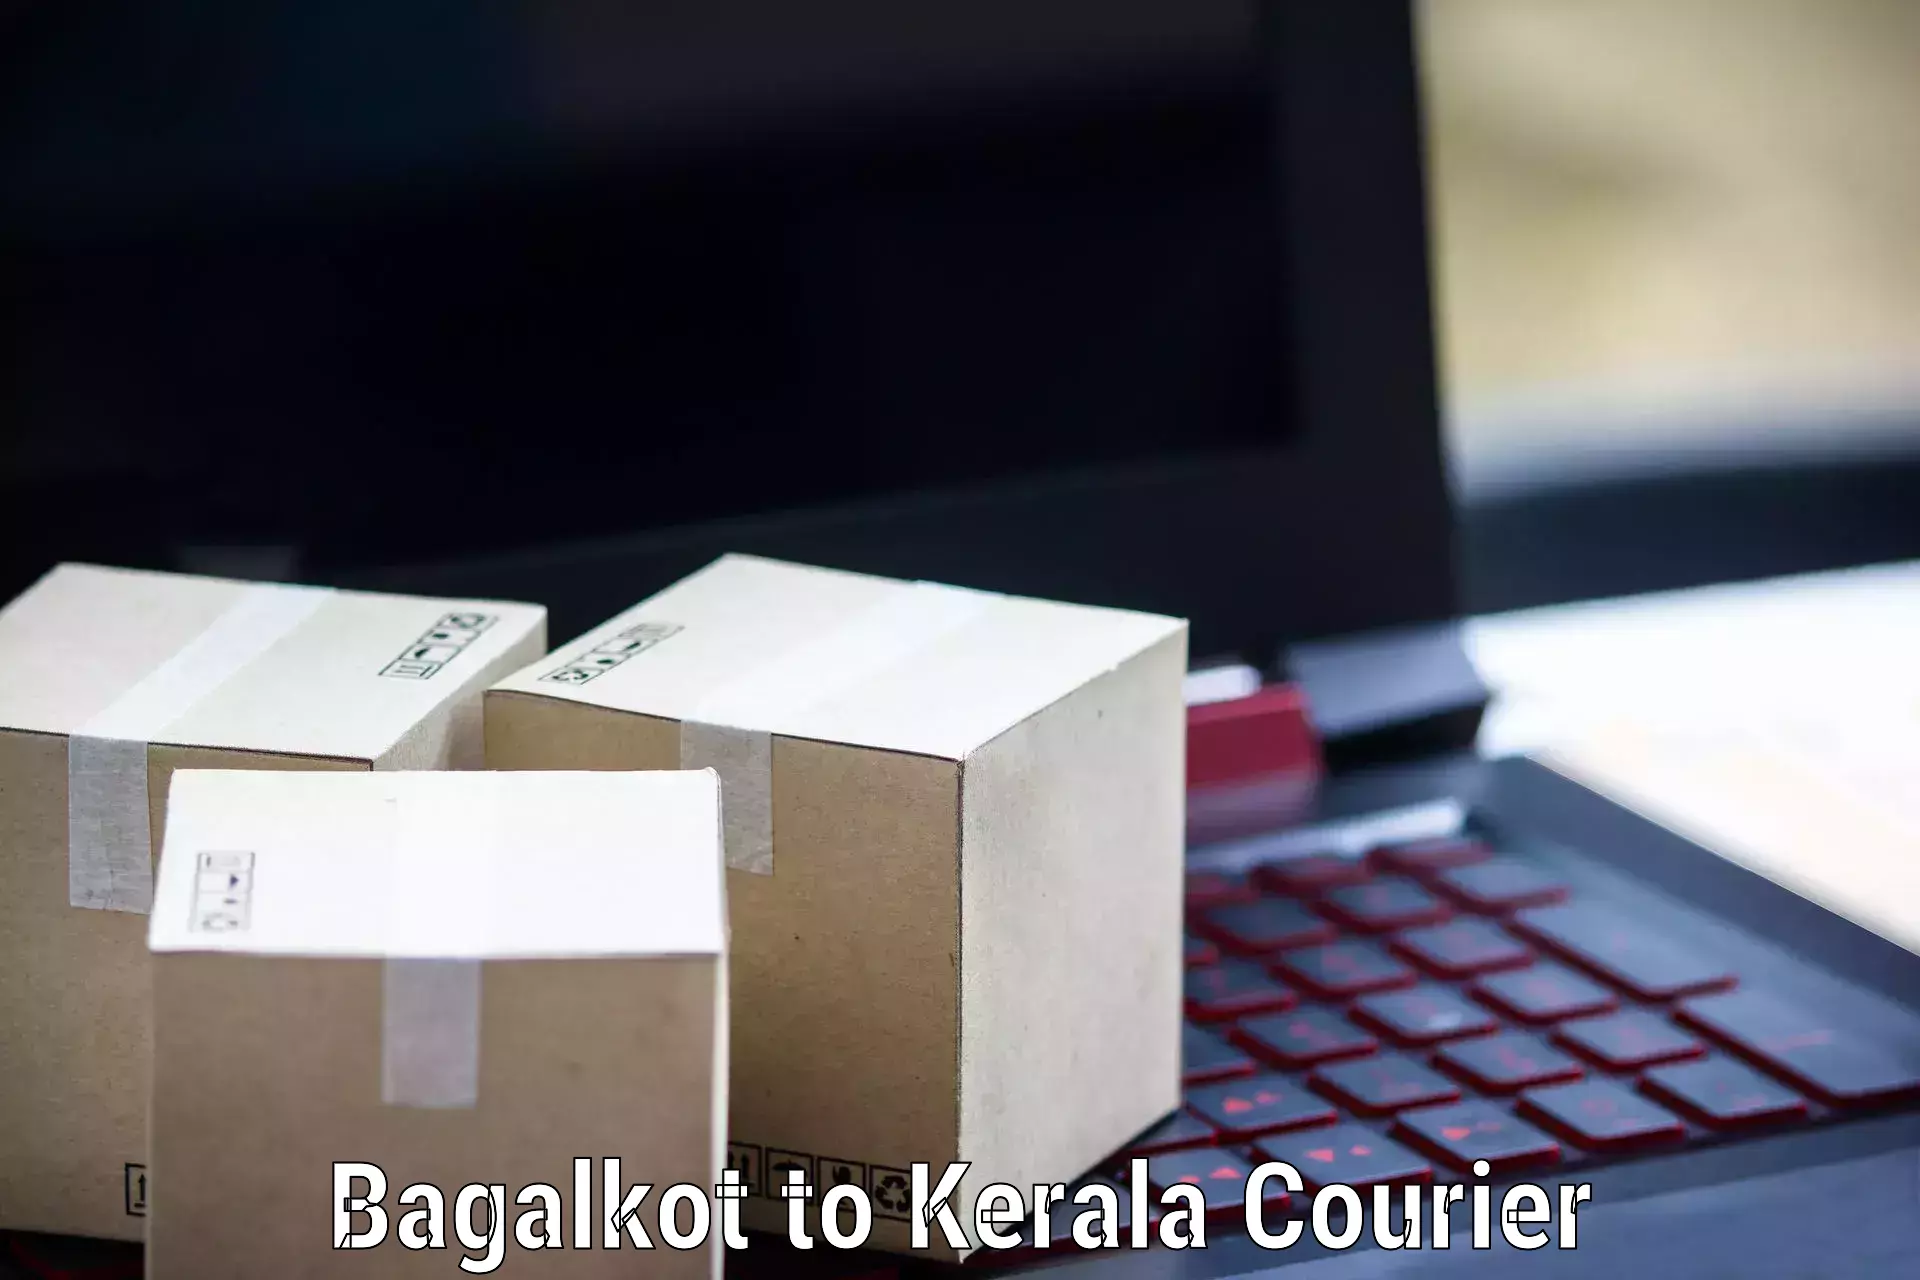 Efficient order fulfillment Bagalkot to Munnar